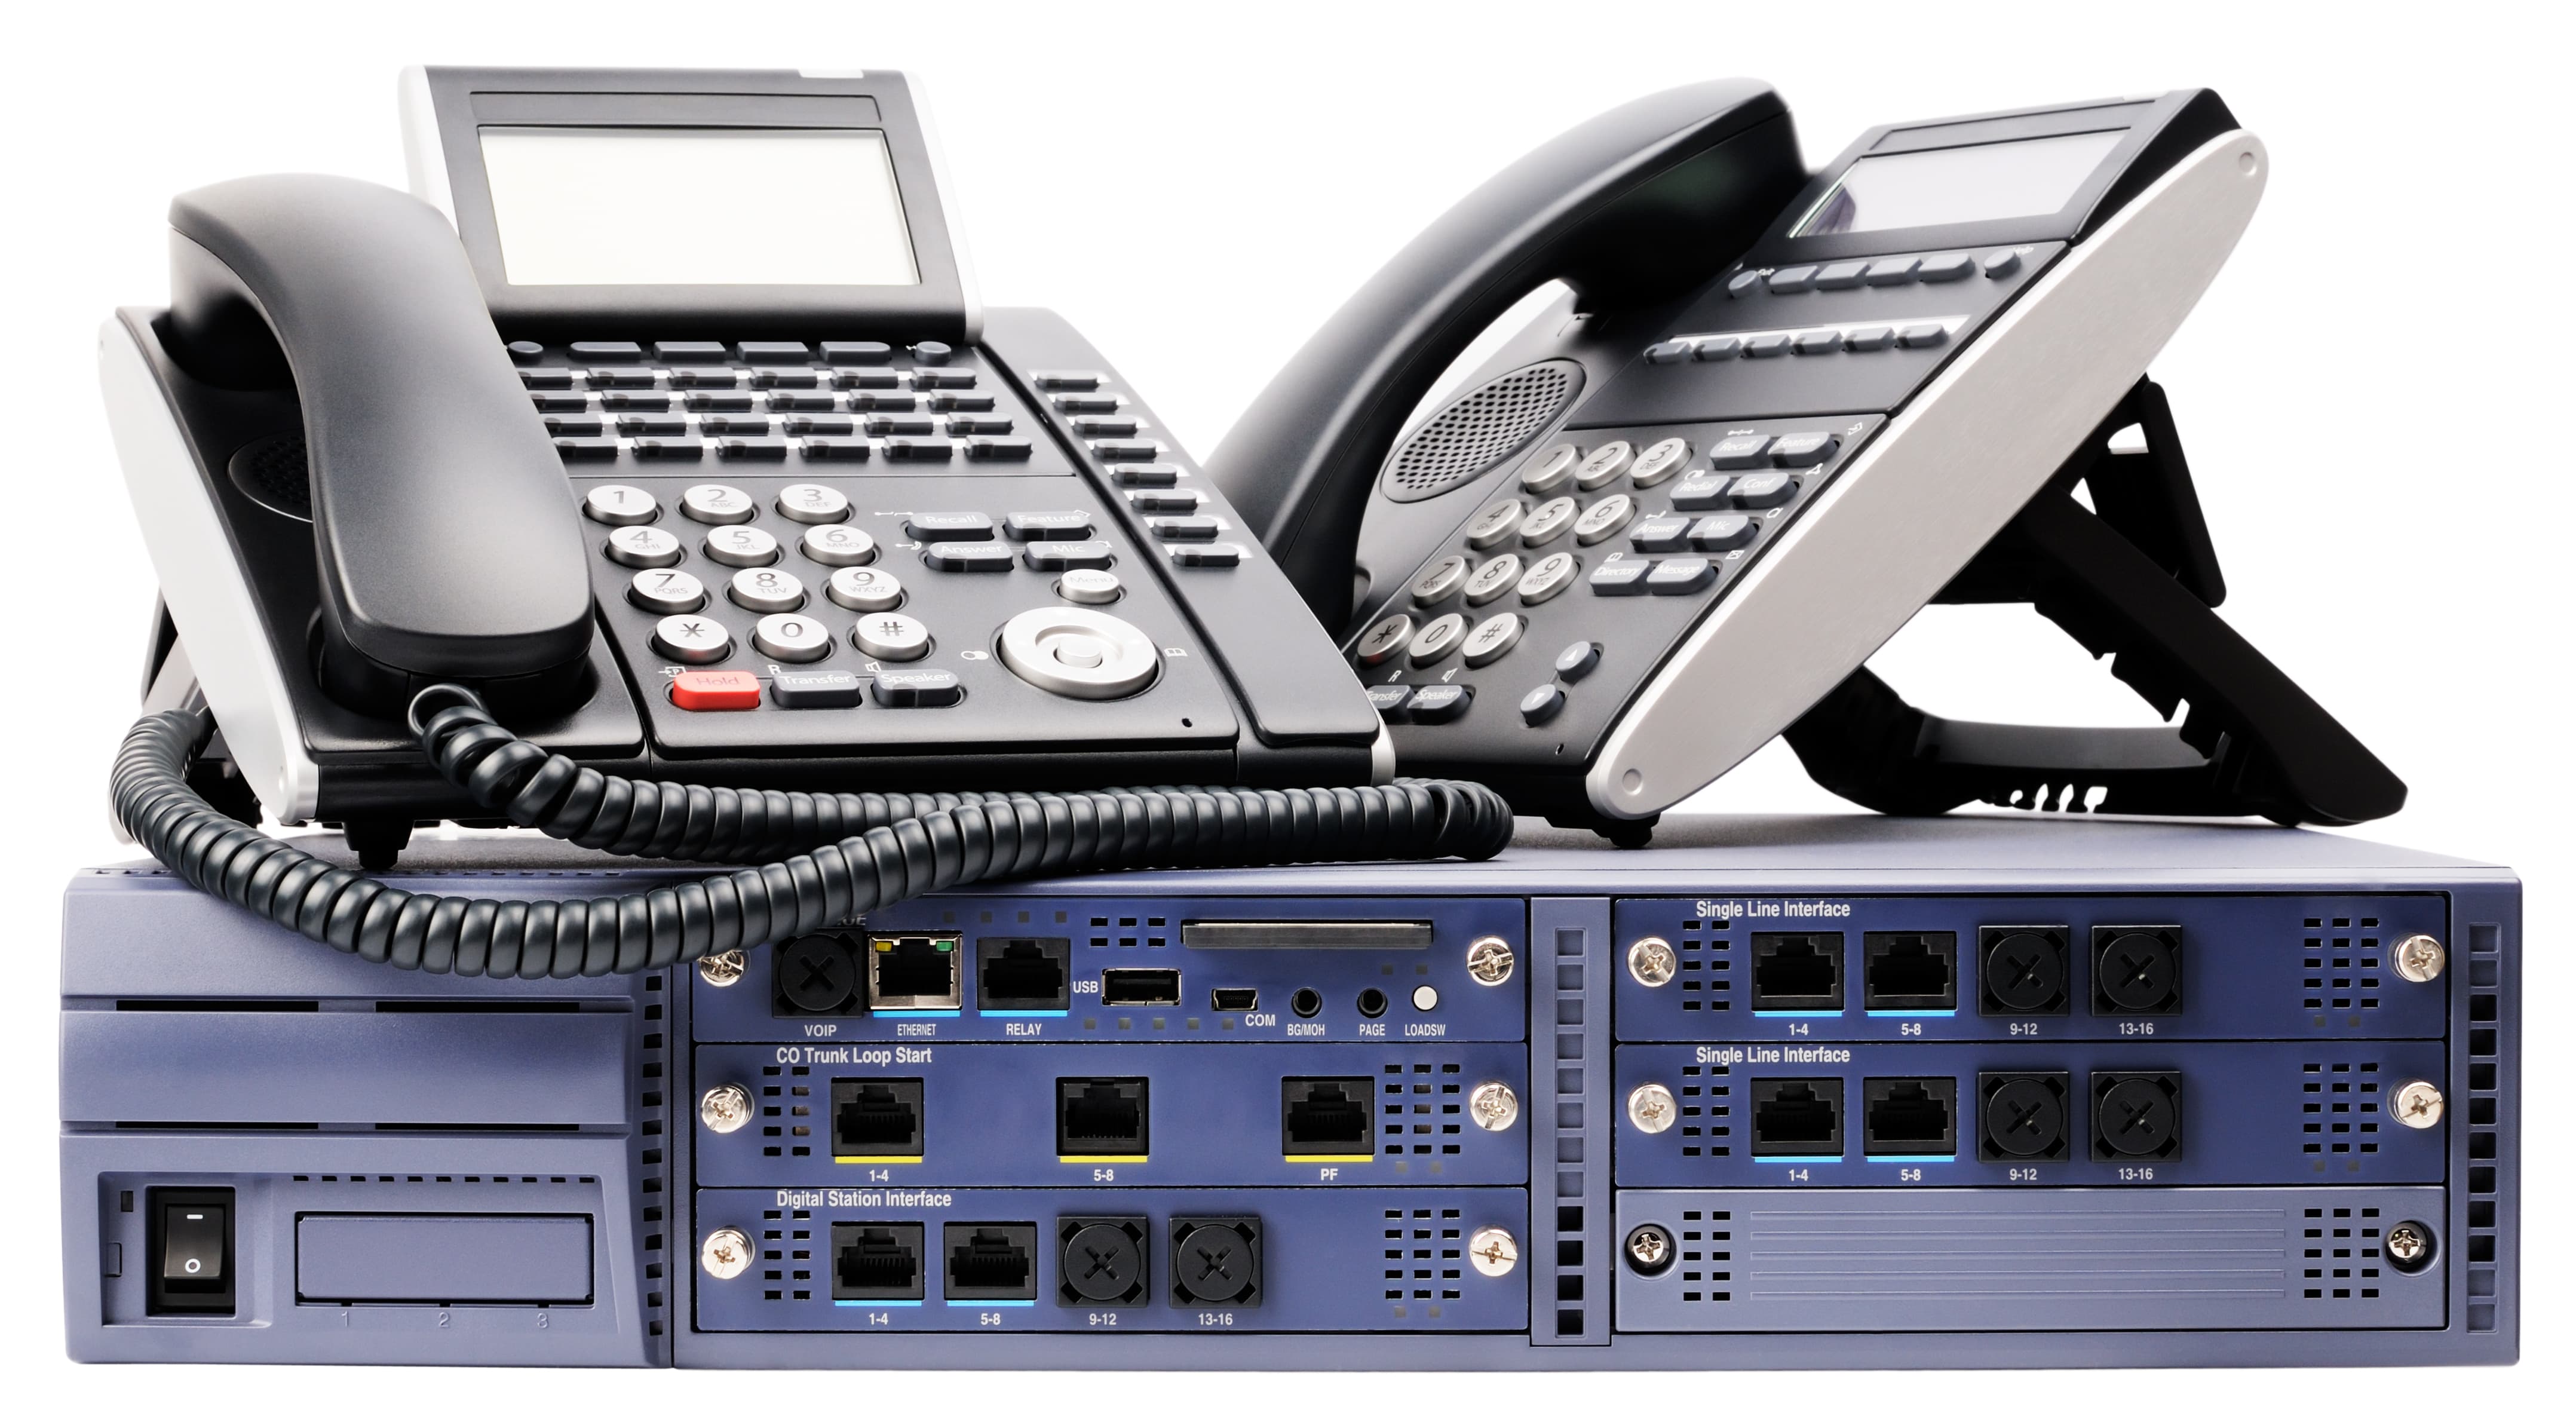 Компания телефония. IP мини АТС. УПАТС PABX. Оборудование для телефонии. Оборудование для IP телефонии.